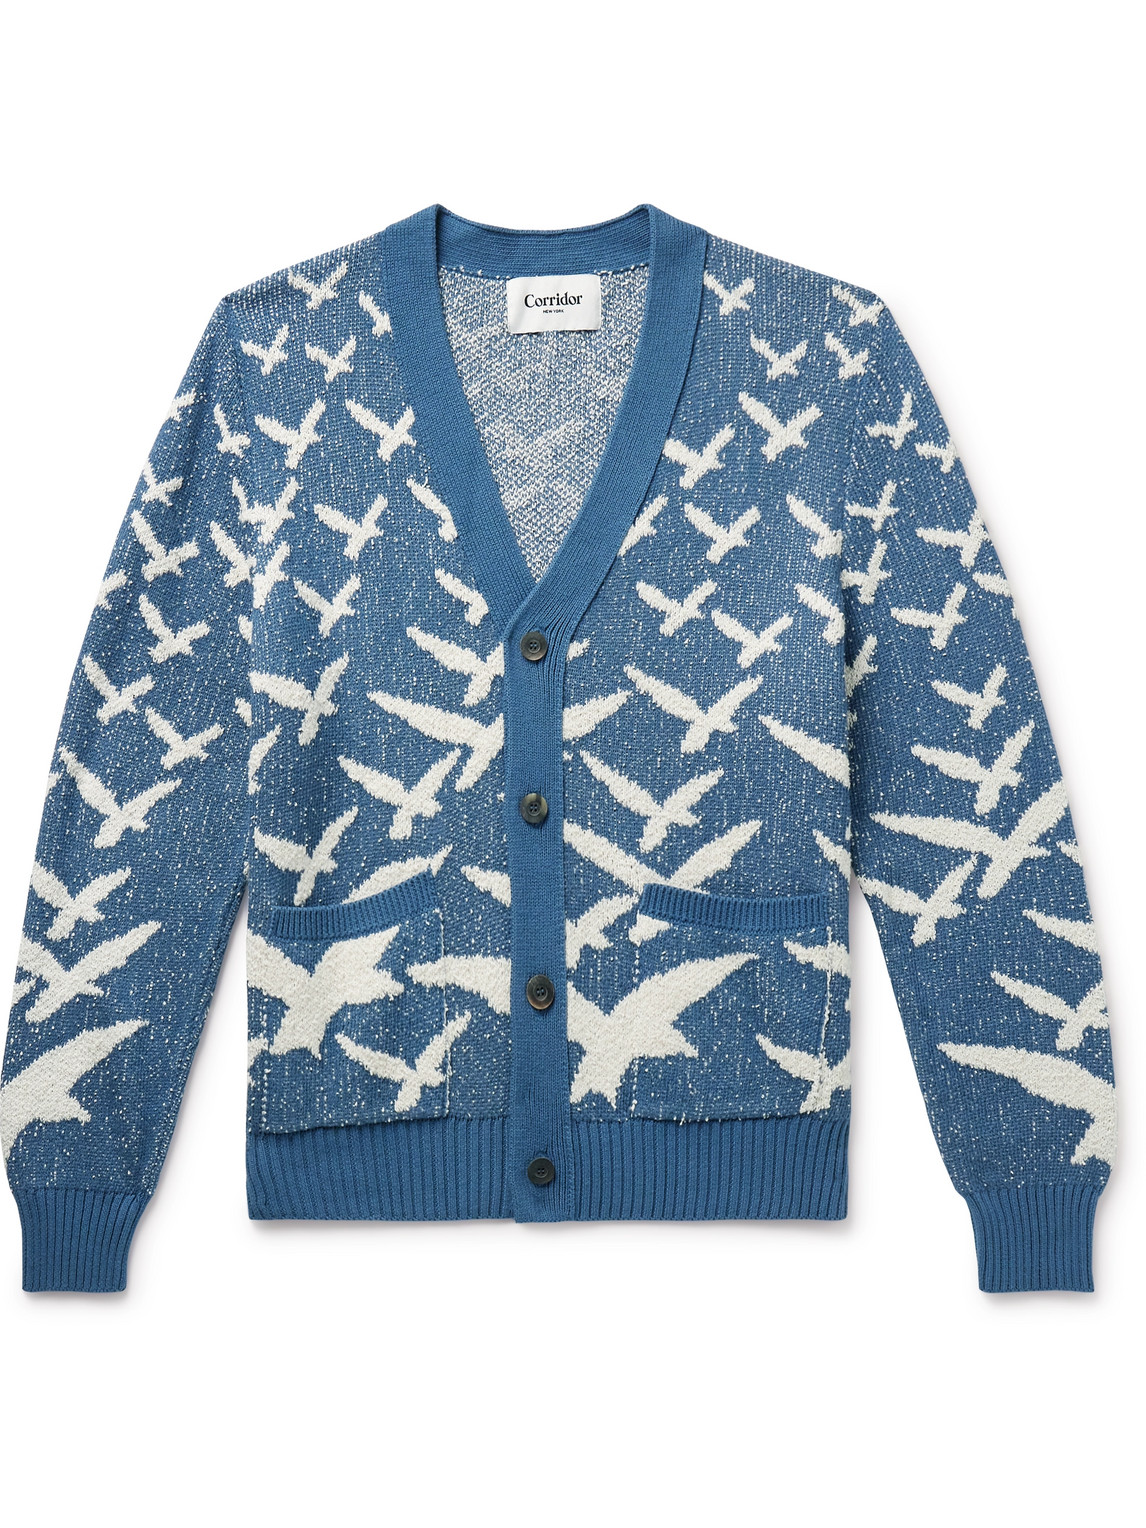 Seagull Jacquard-Knit Cotton Cardigan